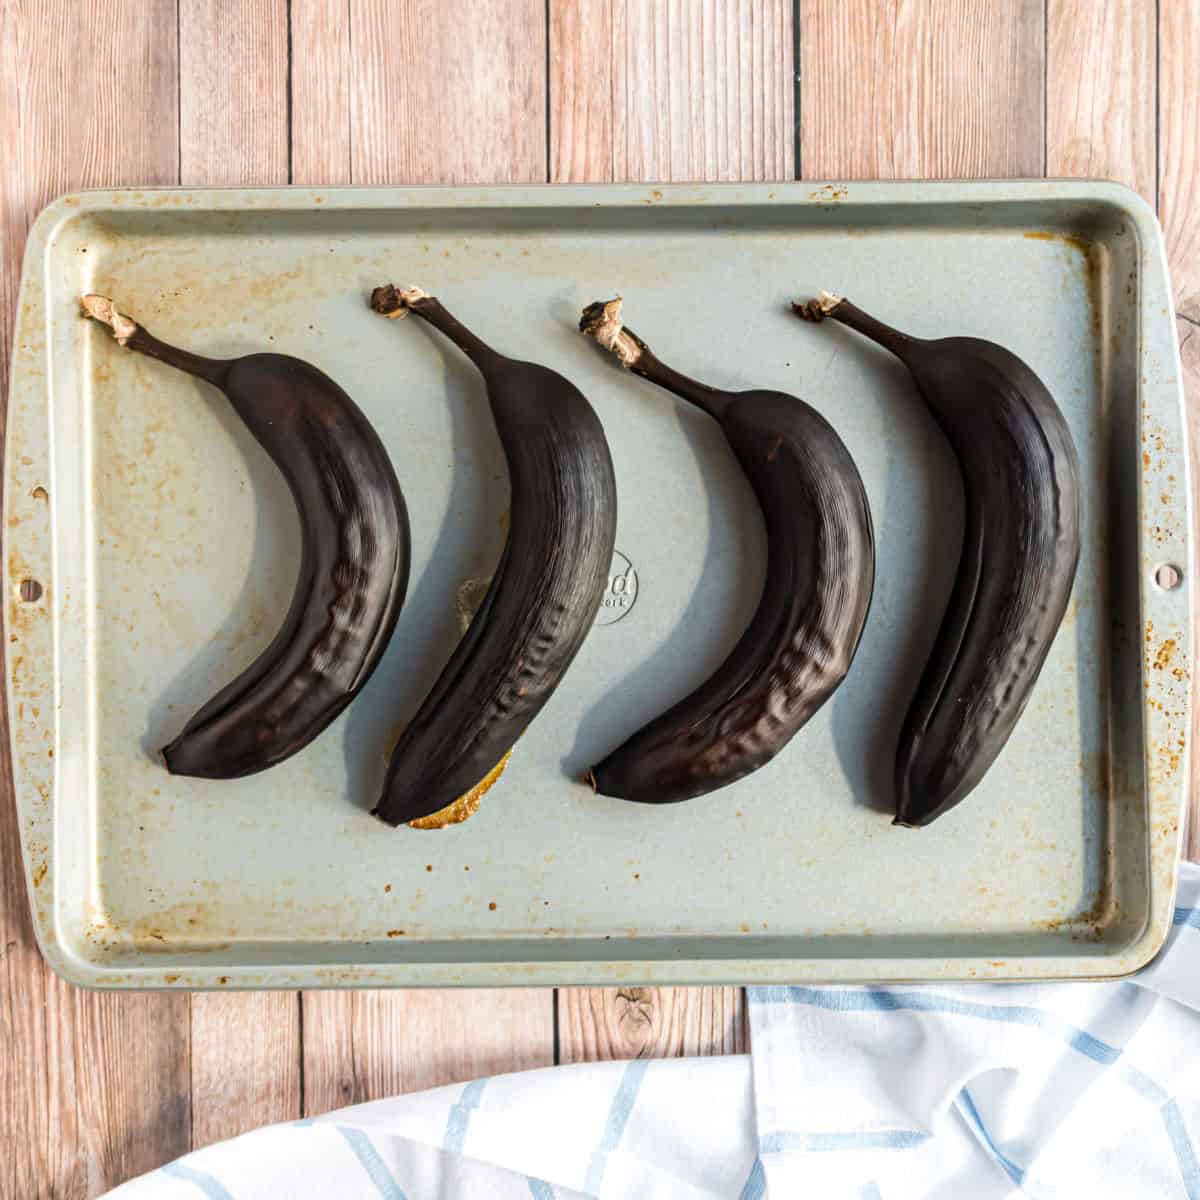 Black ripe bananas on a cookie sheet.